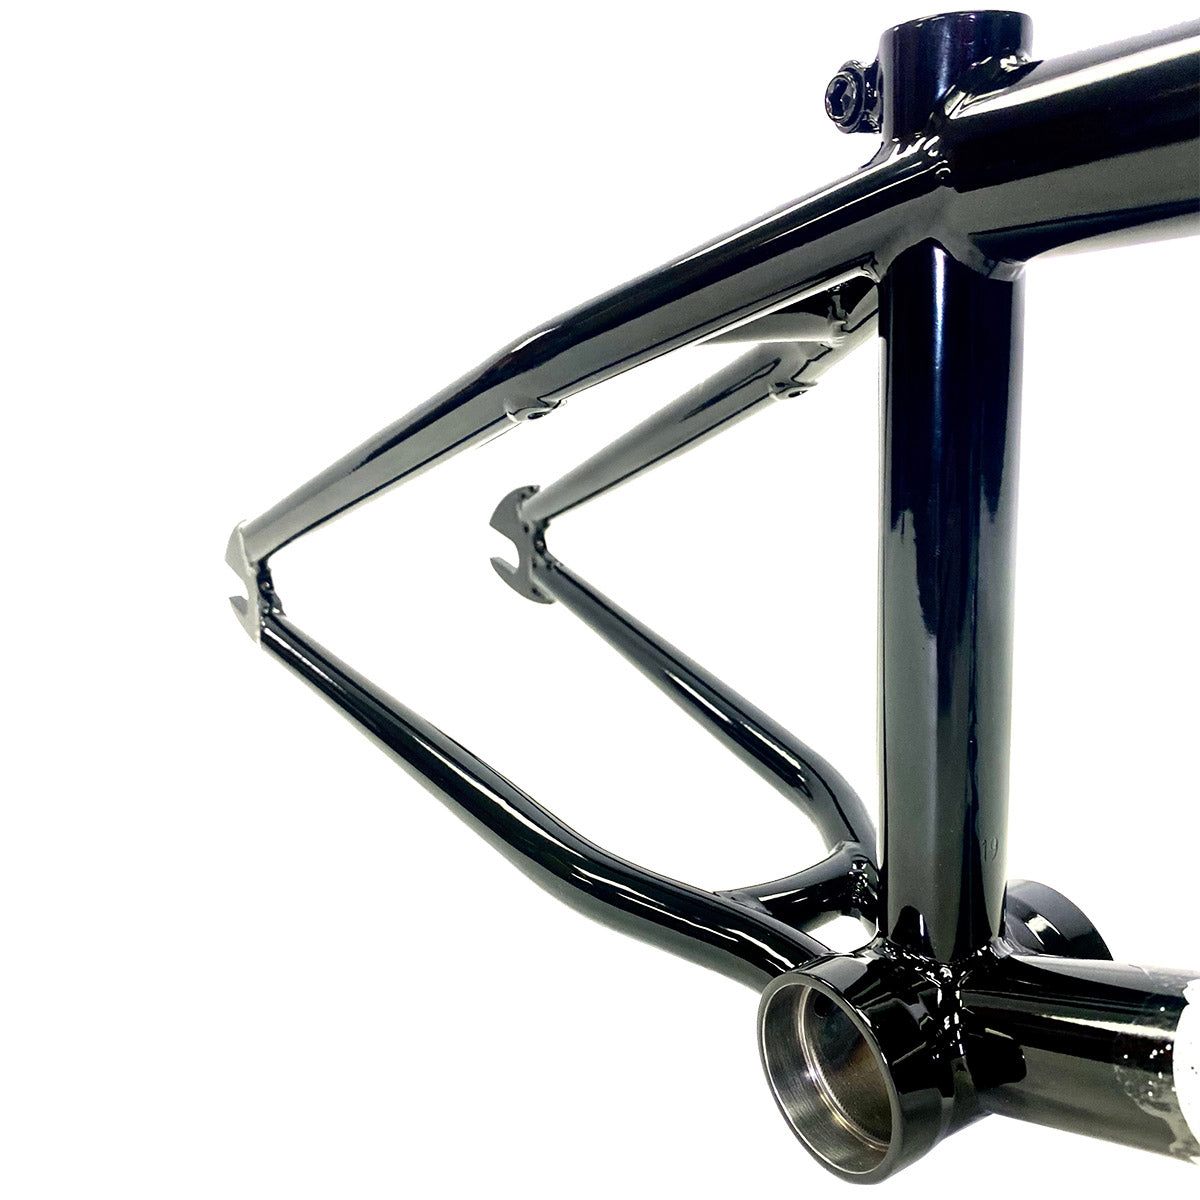 S&M Bikes Dagger 19.5” Black Rahmen / Frame Flatland